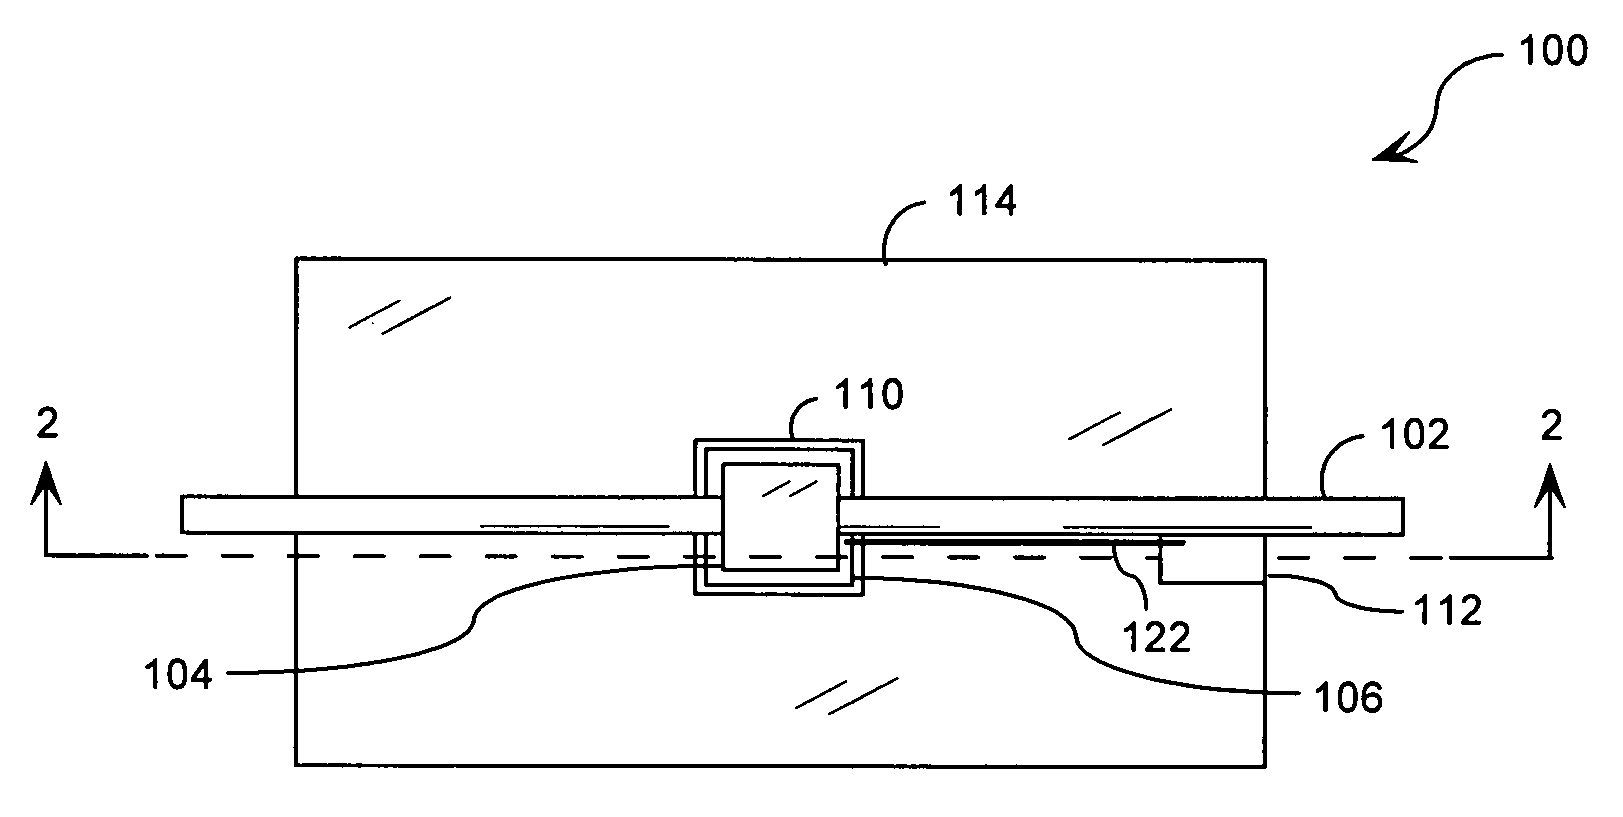 Actuator arrangement for excitation of flexural waves on an optical fiber